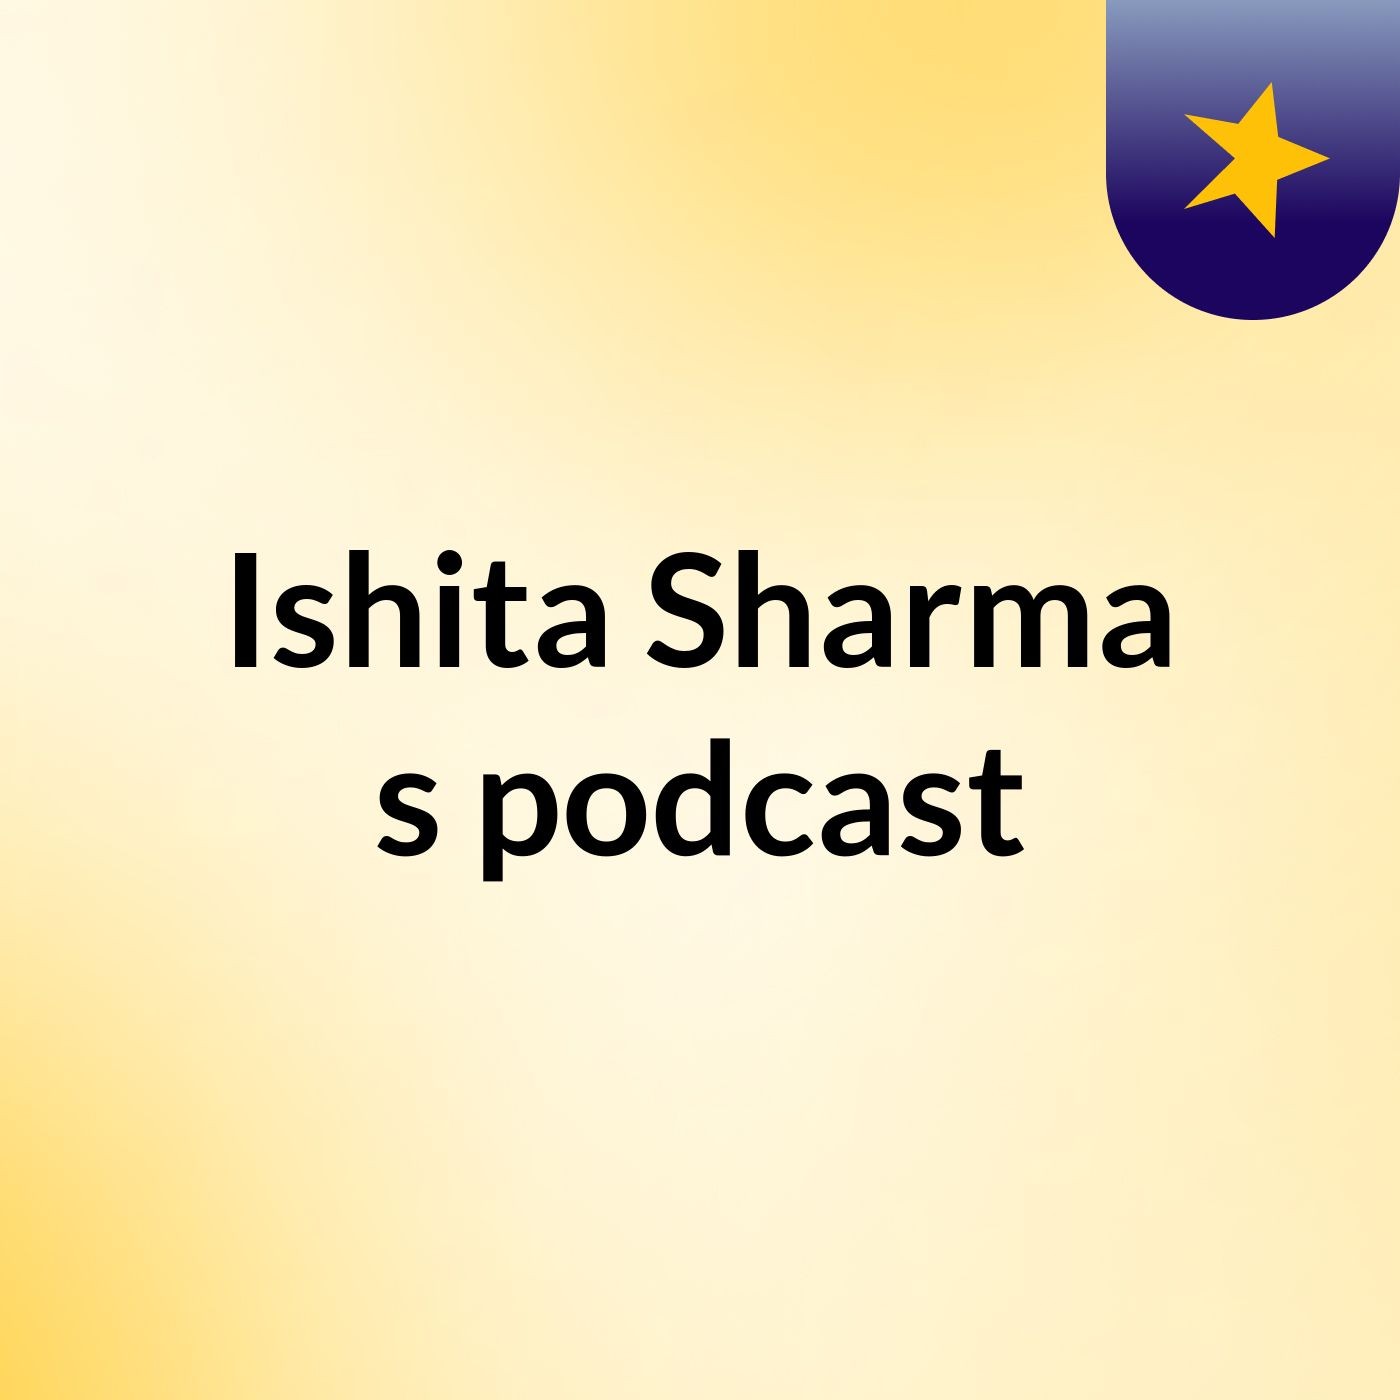 Ishita Sharma's podcast